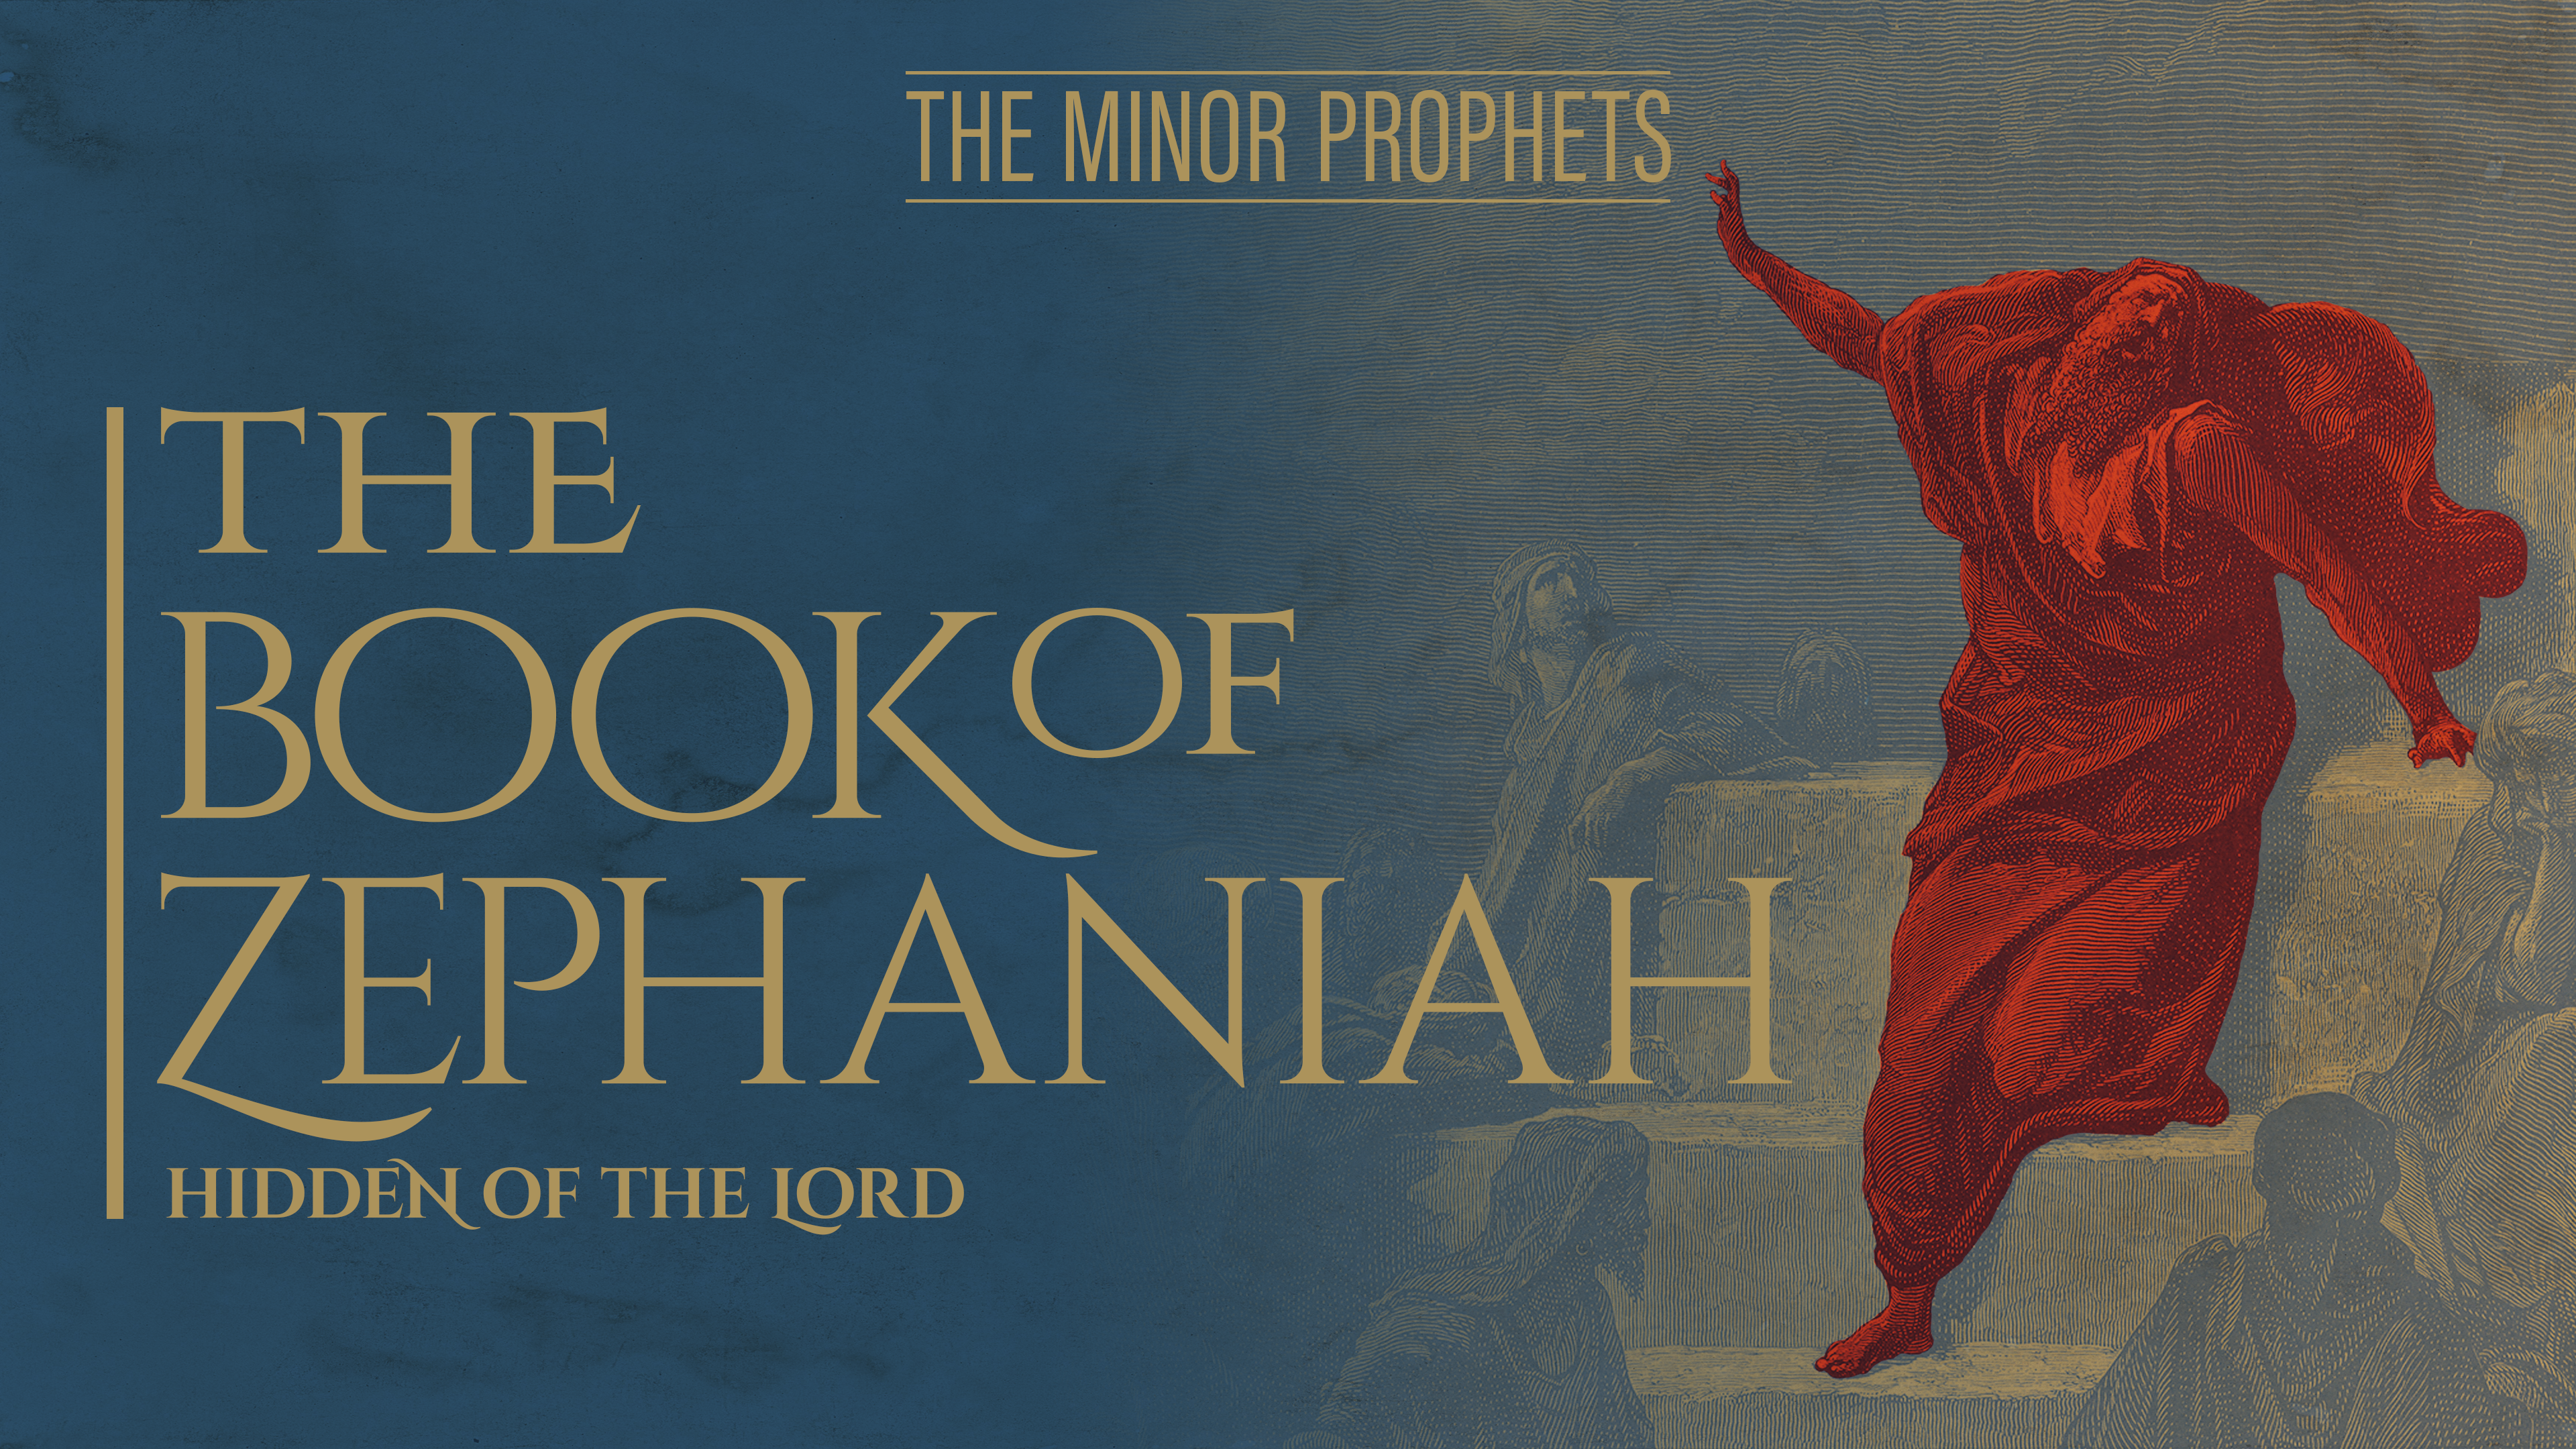 Аудио библия читает. Zephaniah. Judah Jacobson Bible. Great and small Prophets Bible.